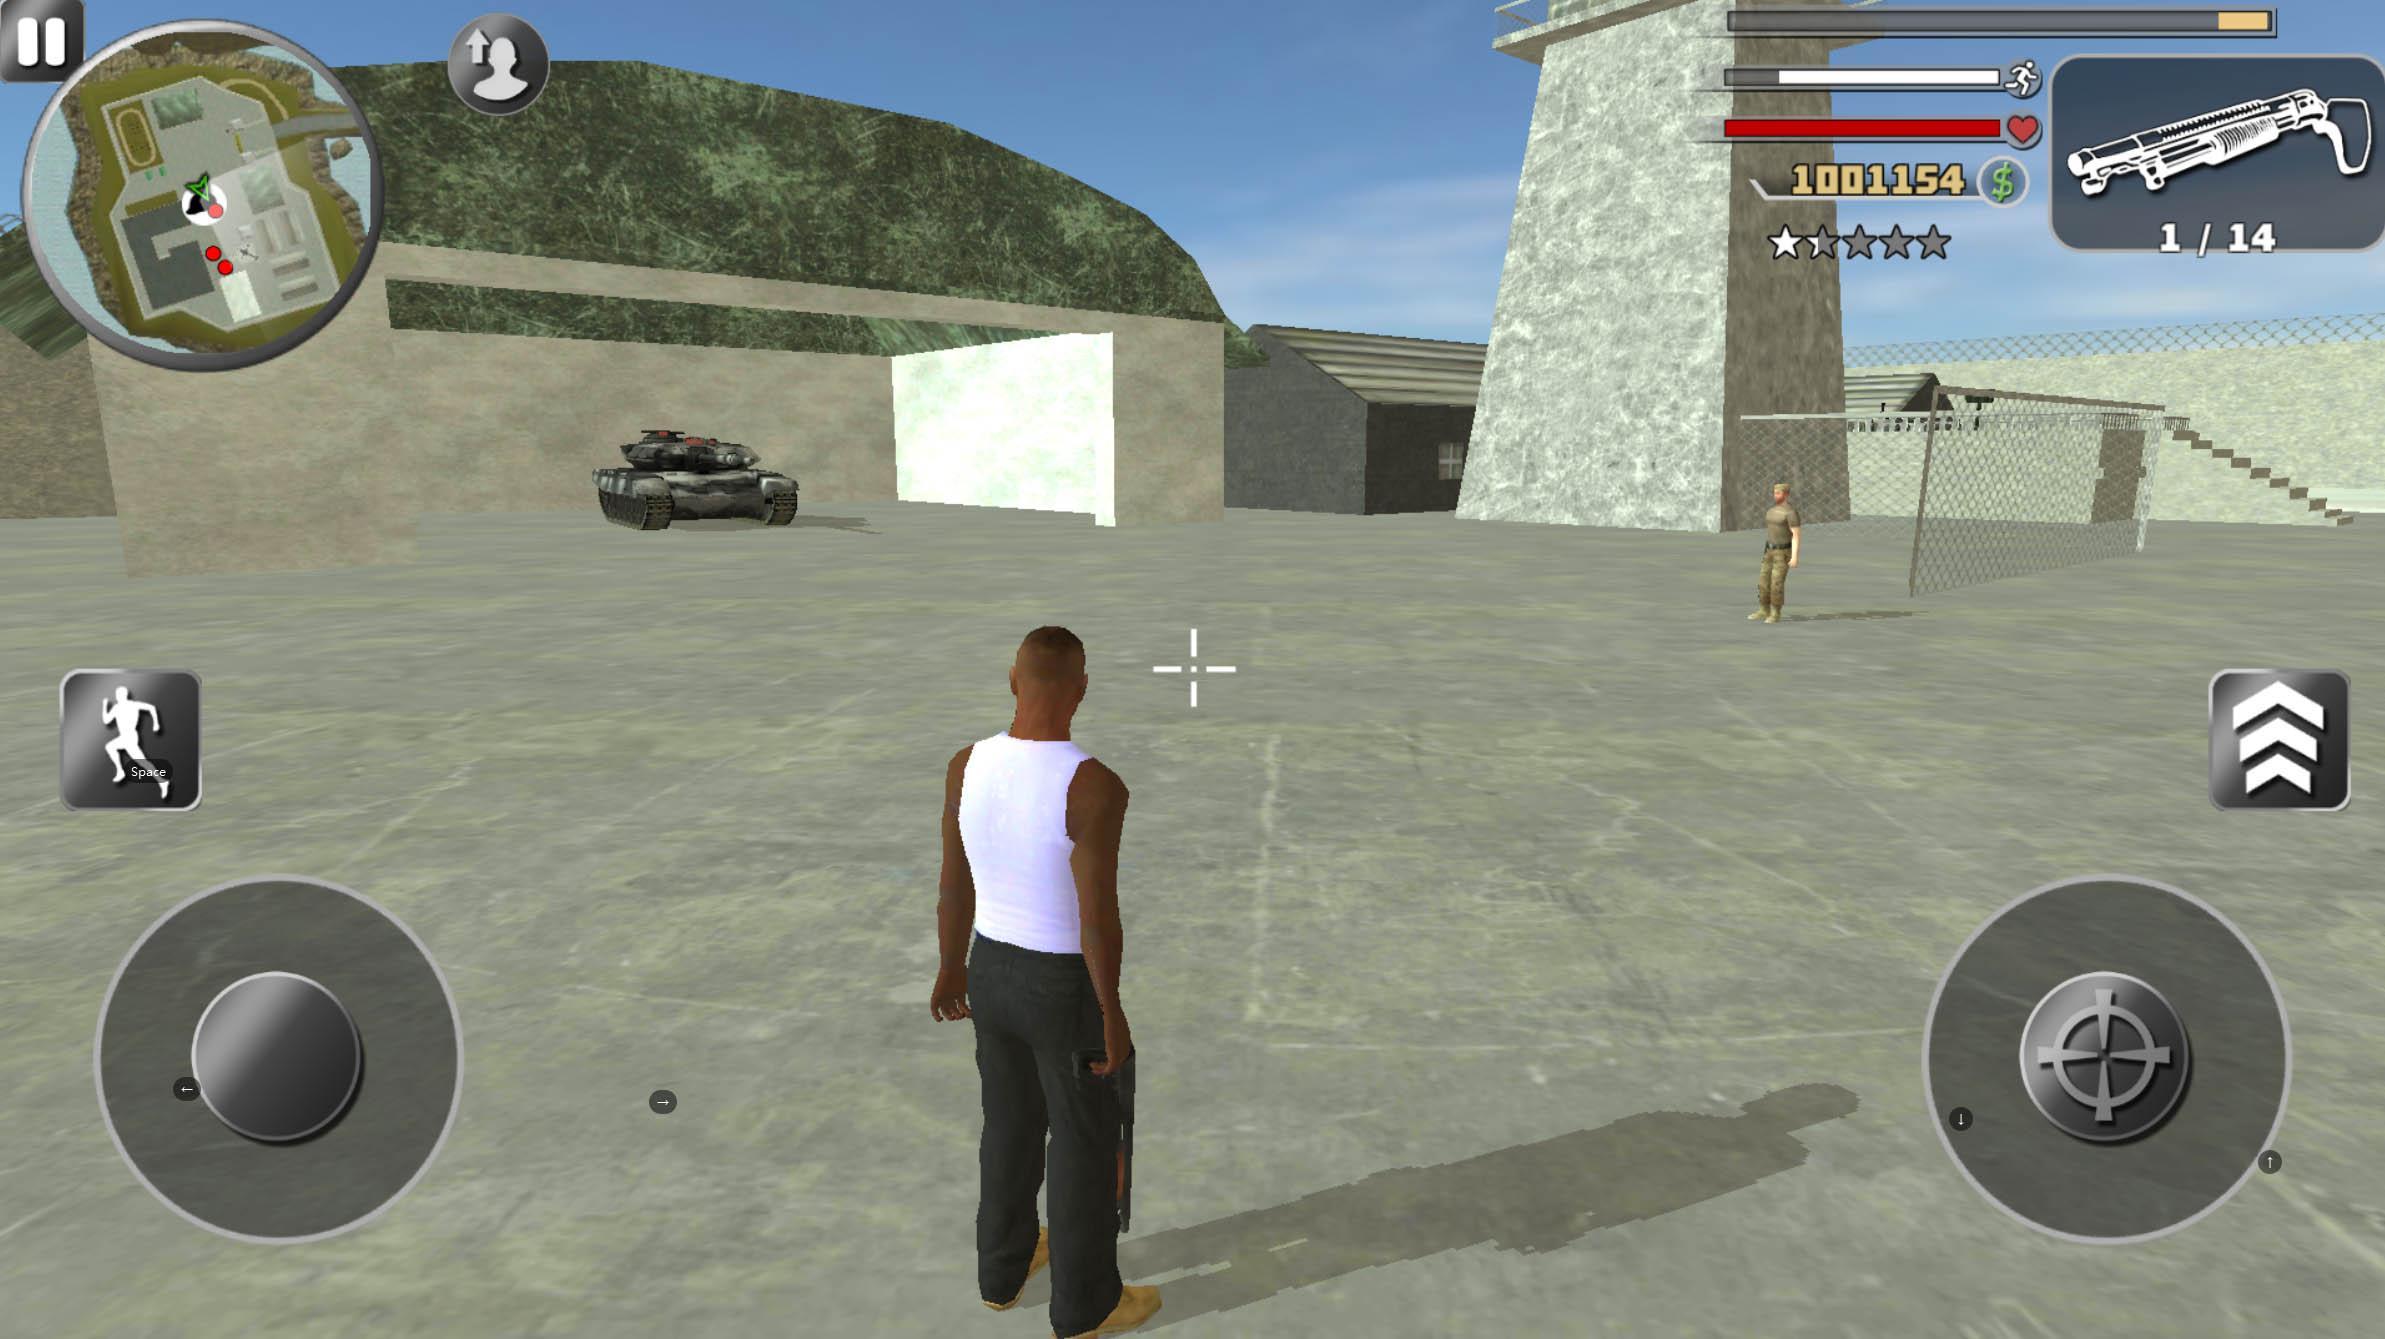 Theft Crime Simulator For Android Apk Download - criminal simulator roblox